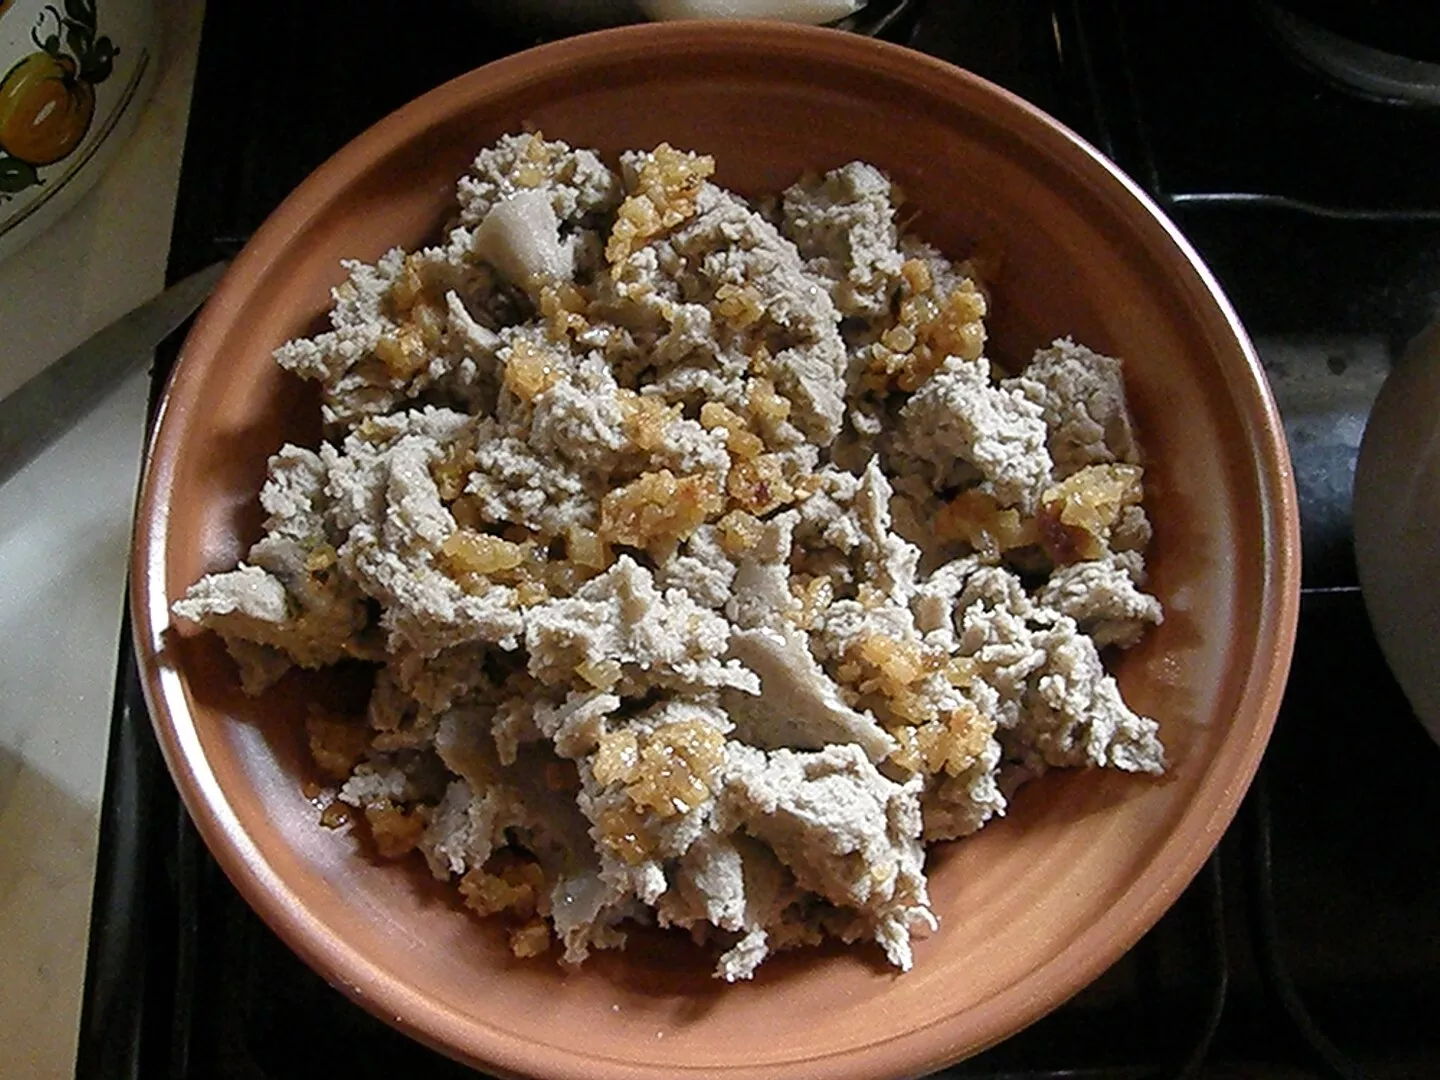 Ajdovi žganci - Slovenian traditional food